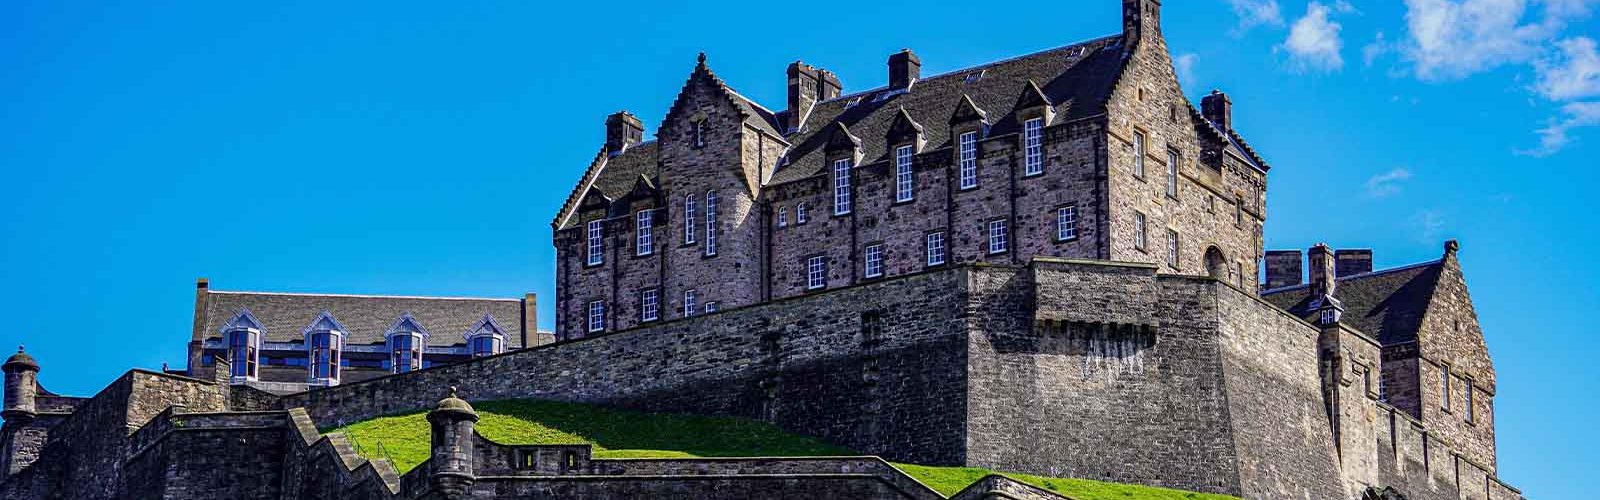 Edinburgh Castle with a blue sky.